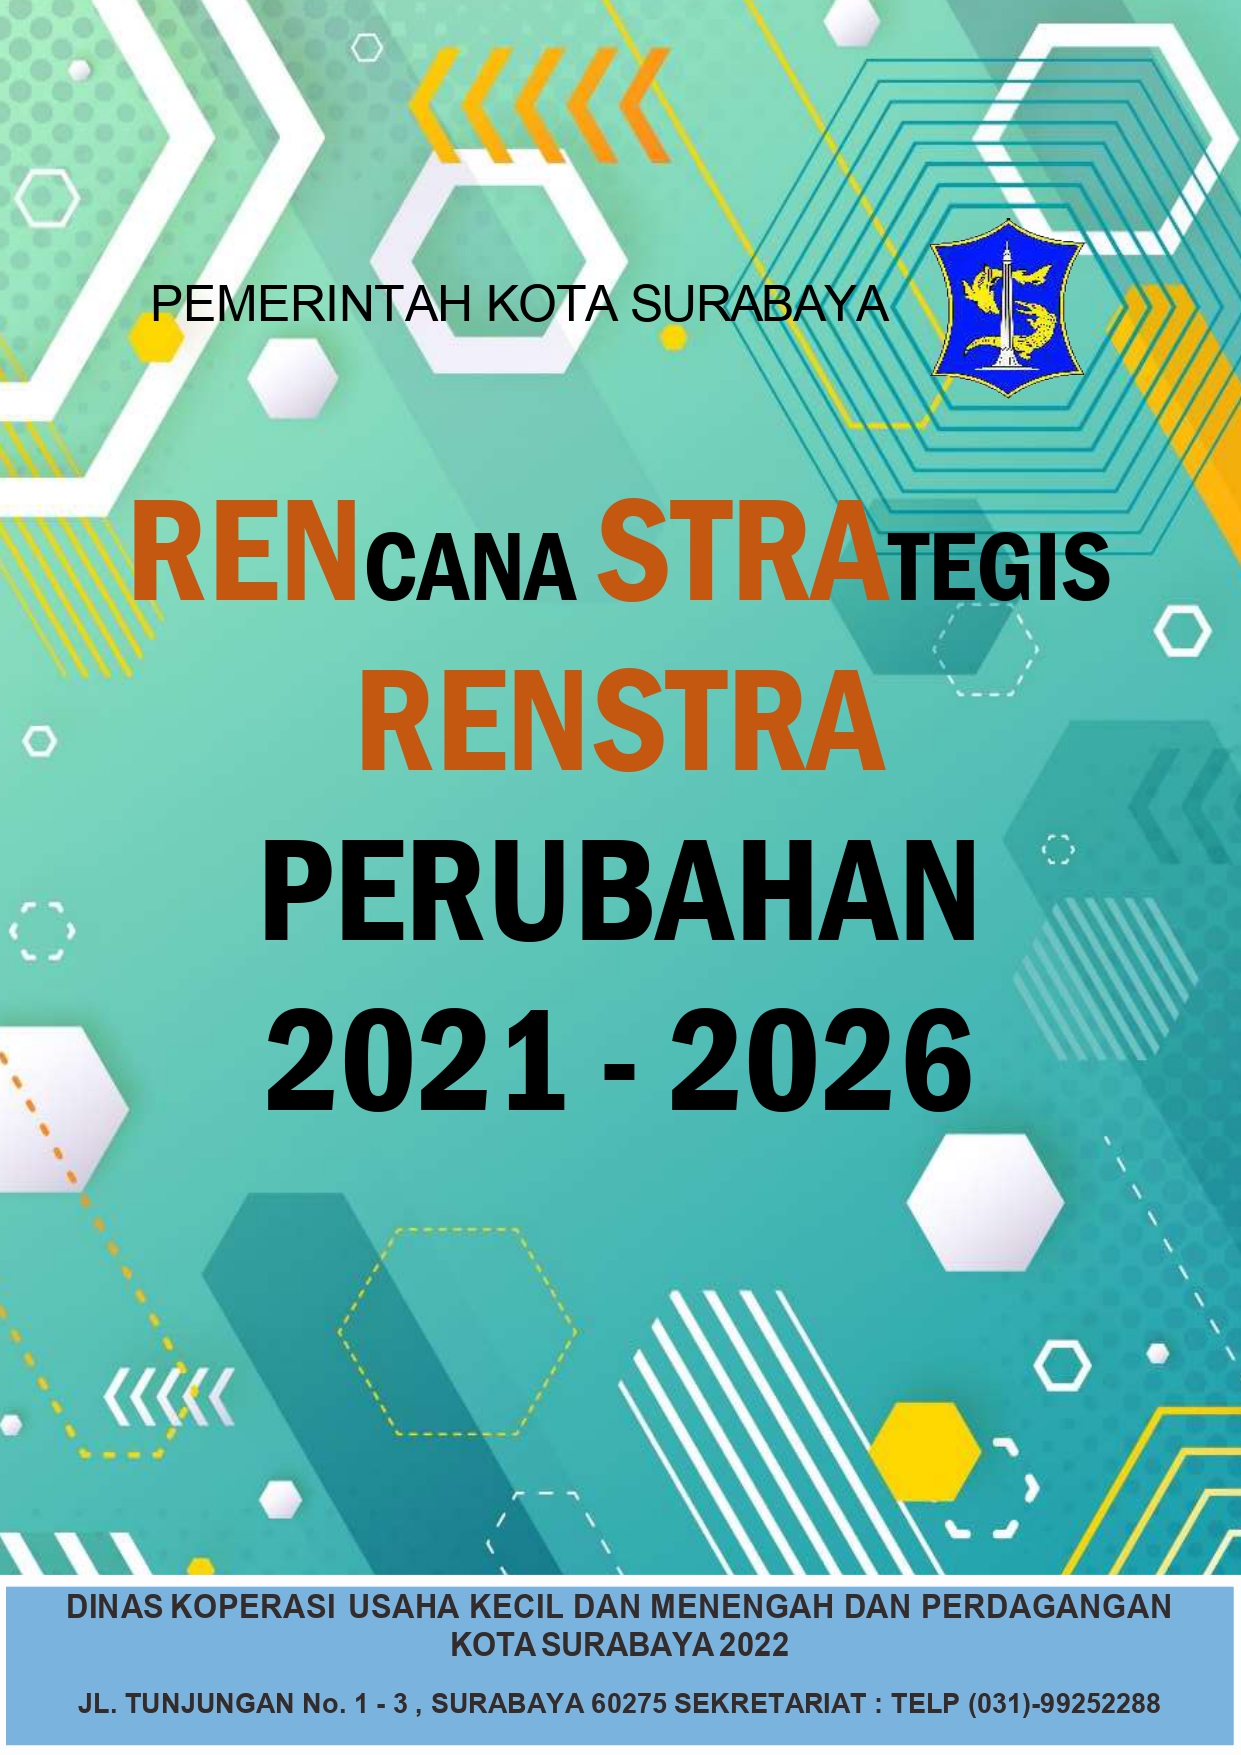 Renstra 2021-2026 Perubahan